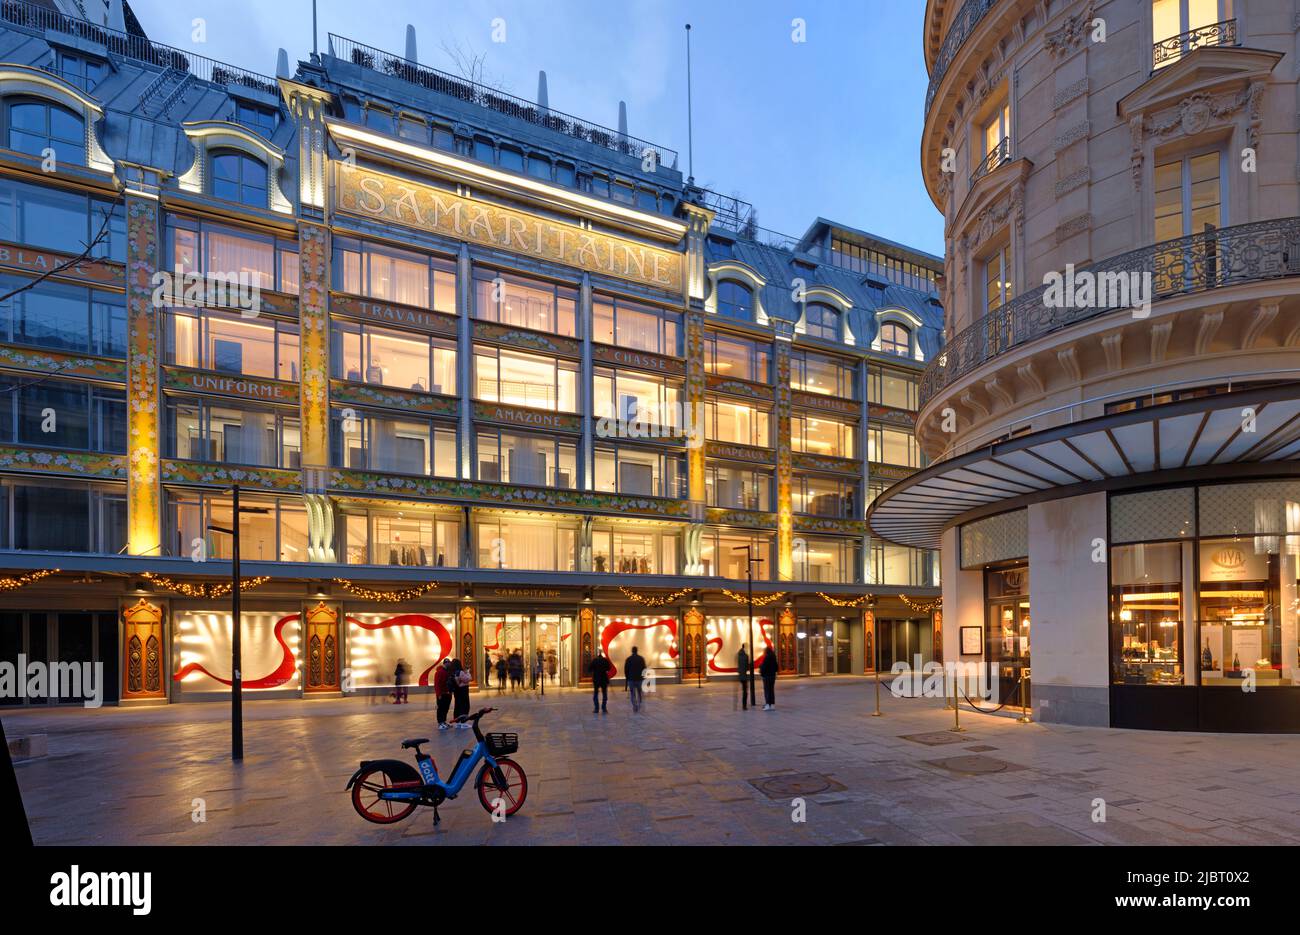 France, Paris, La Samaritaine department store Stock Photo